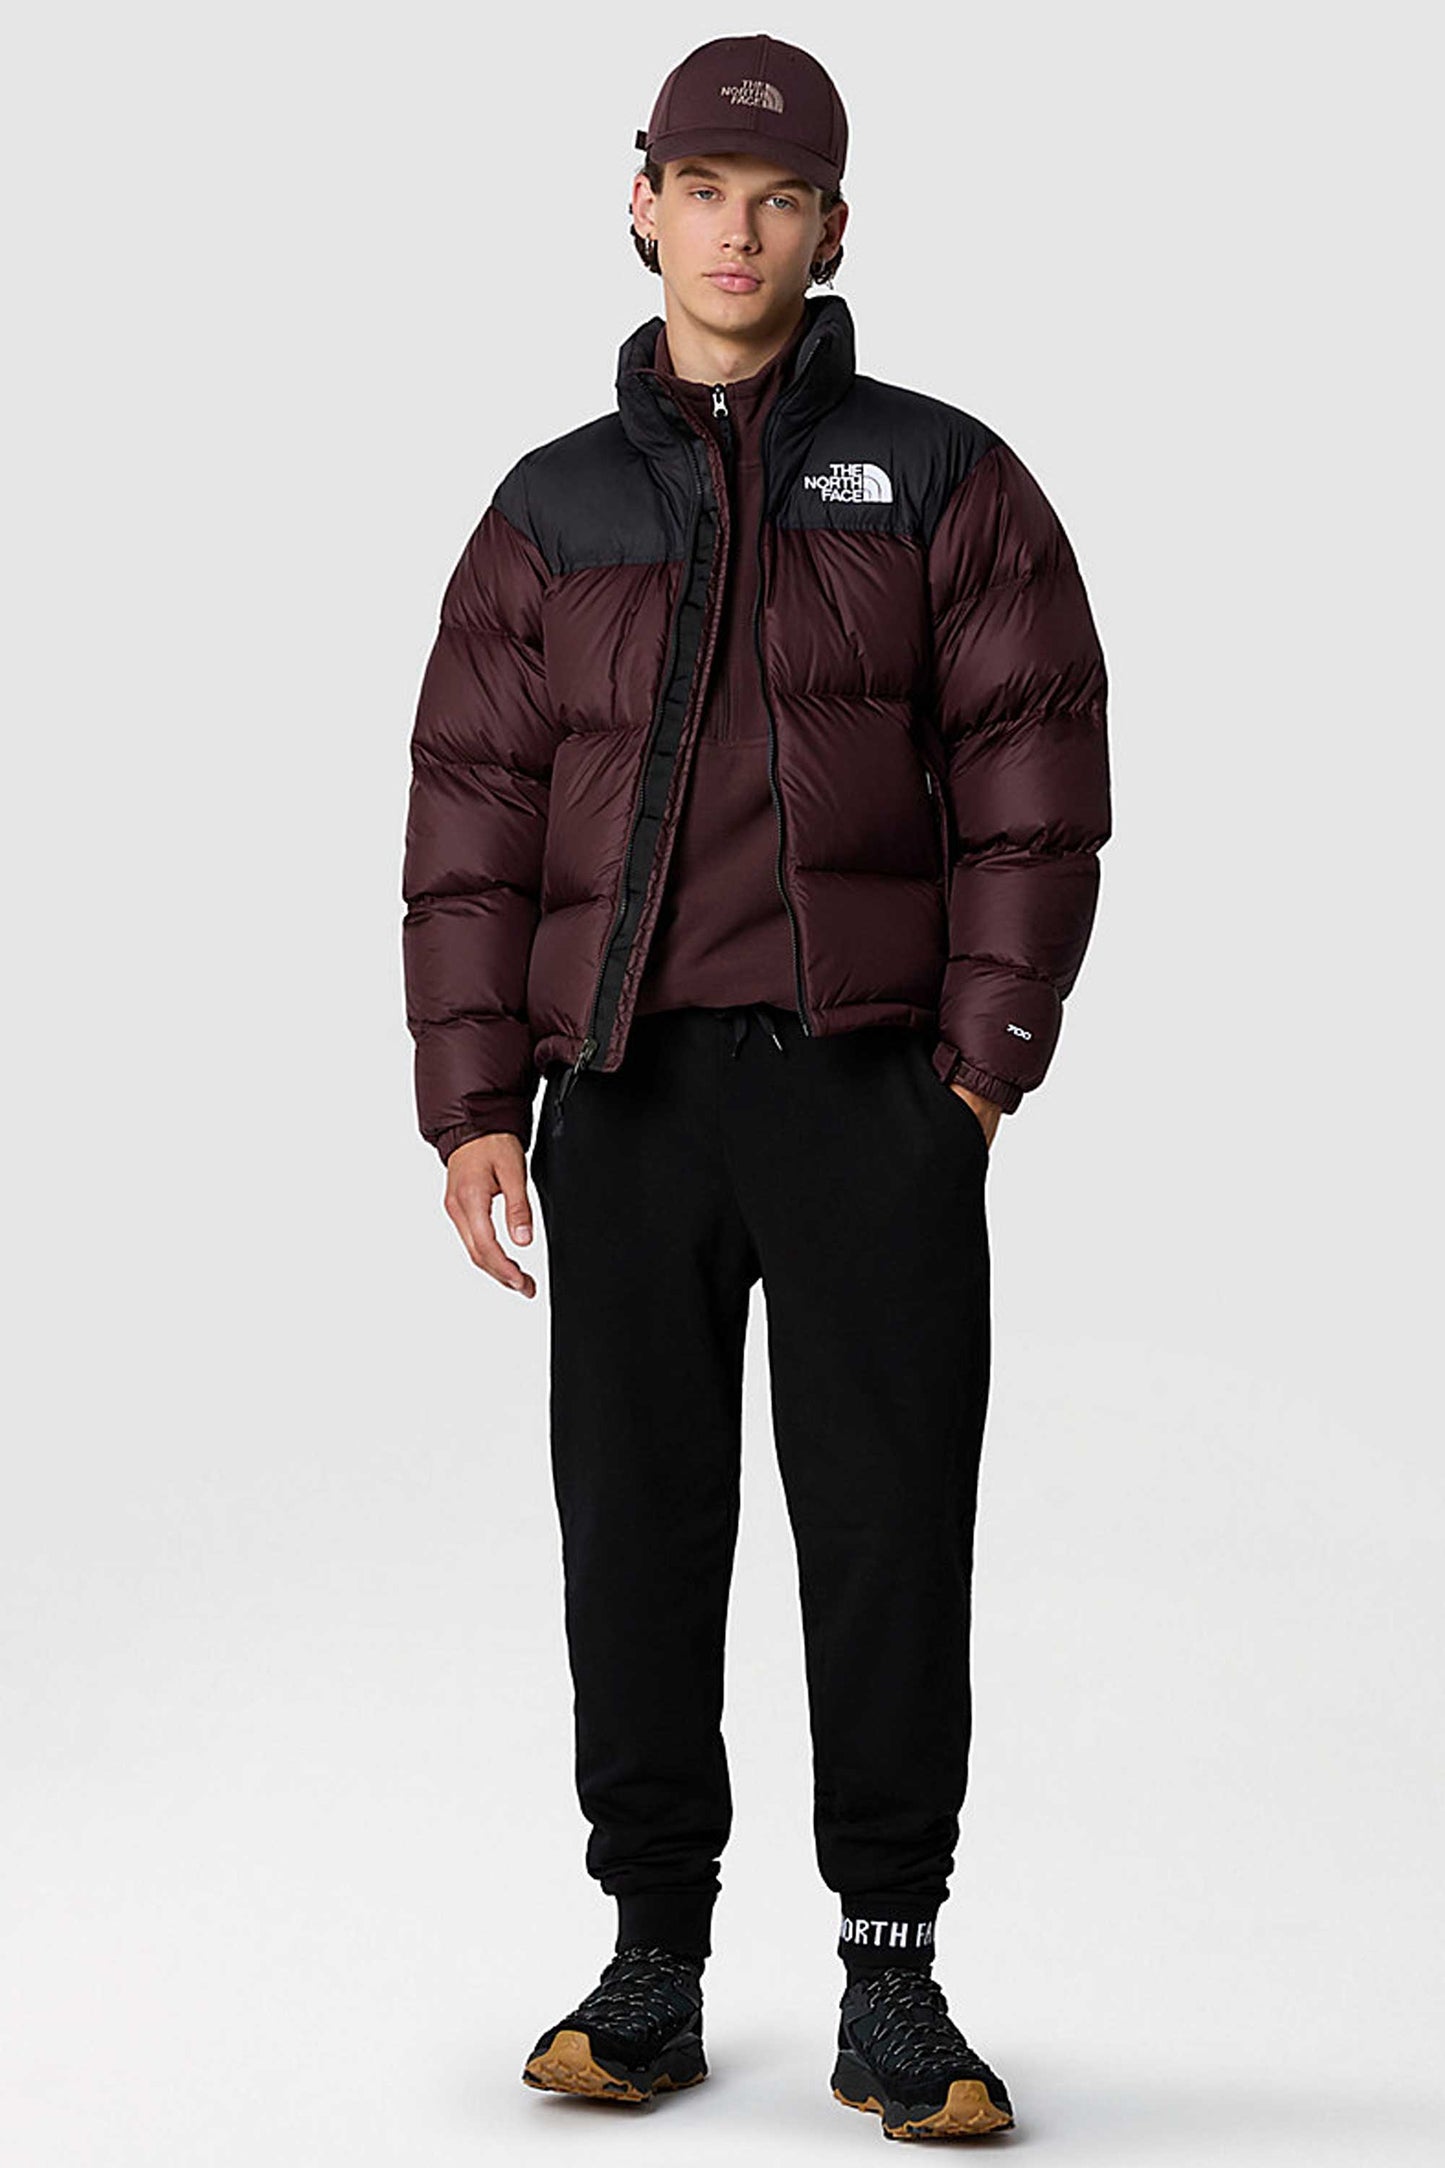 Pukas-Surf-Shop-the-north-face-jacket-man-nuptse-retro-1996-charcoal-brown